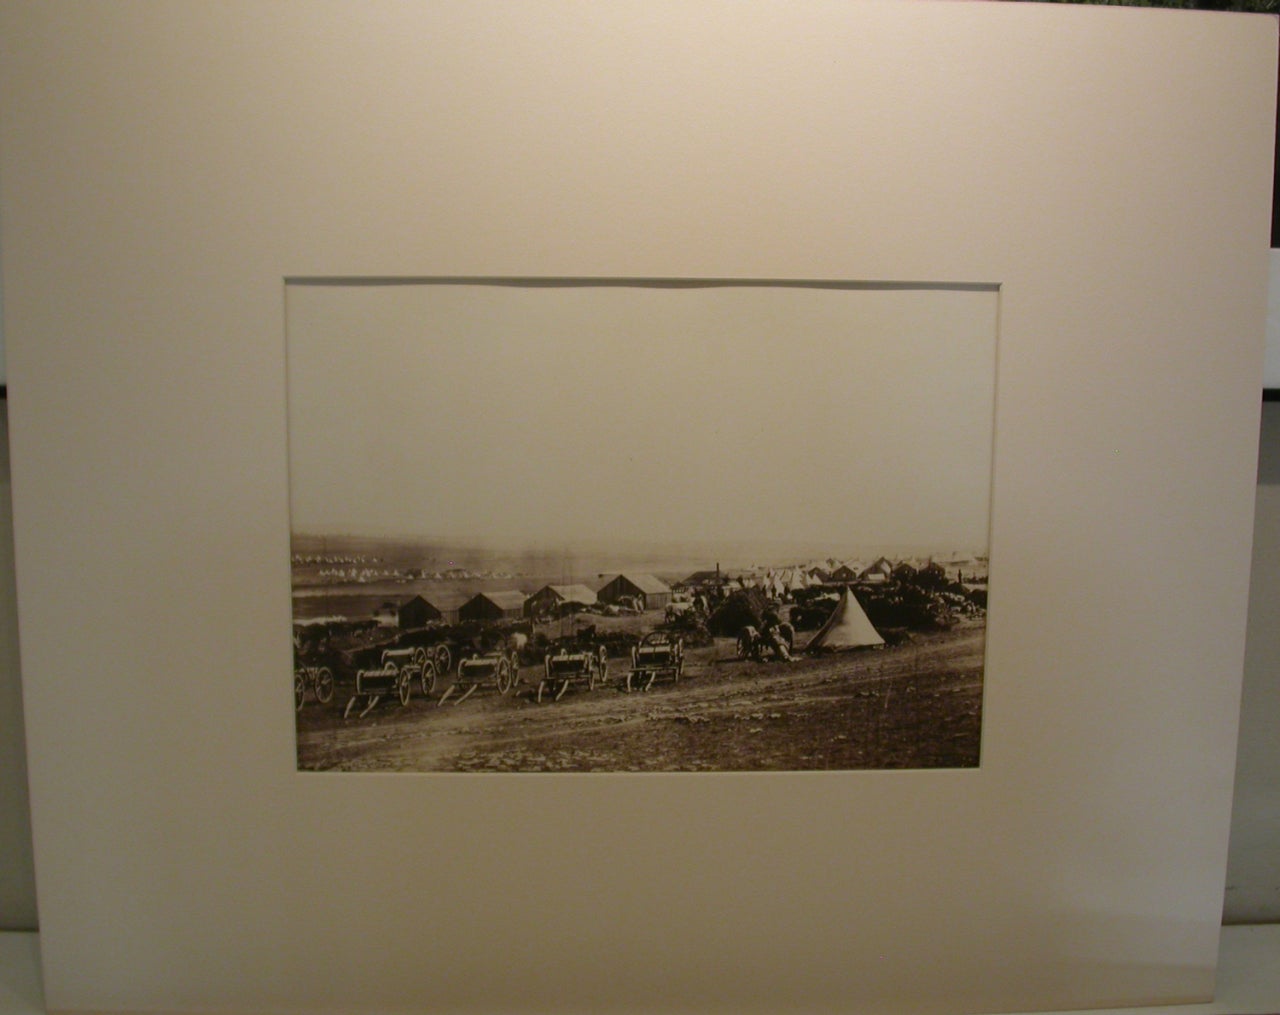 Artillery Wagons, Balaklava in the Distance - Photograph by Roger Fenton